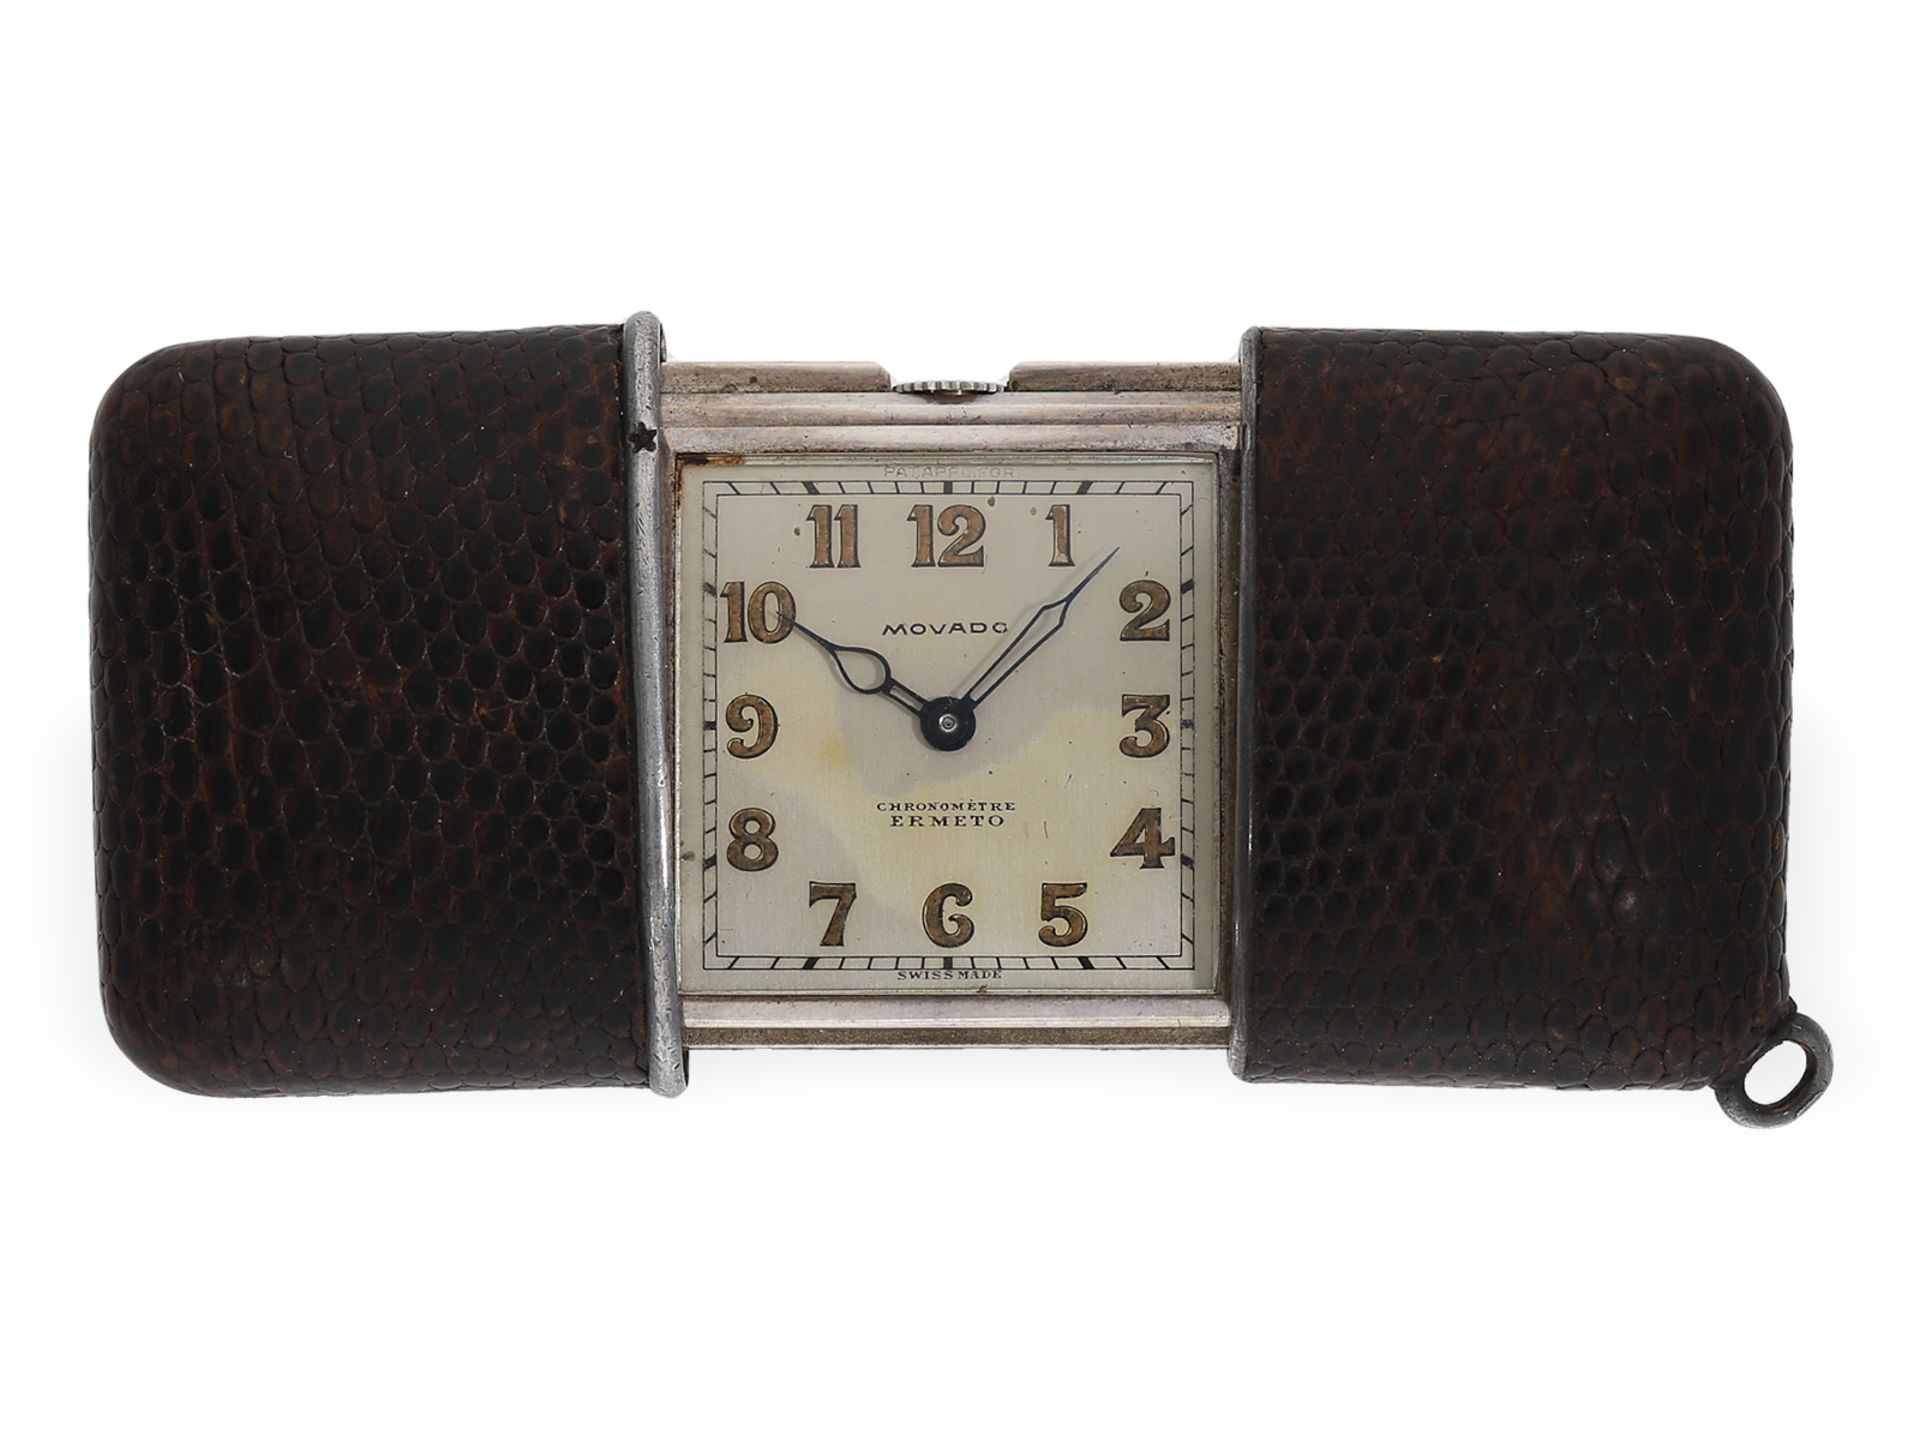 Pocket watch/travel watch: 4 Movado "CHRONOMETRE ERMETO", ca. 1950-60 - Image 5 of 8